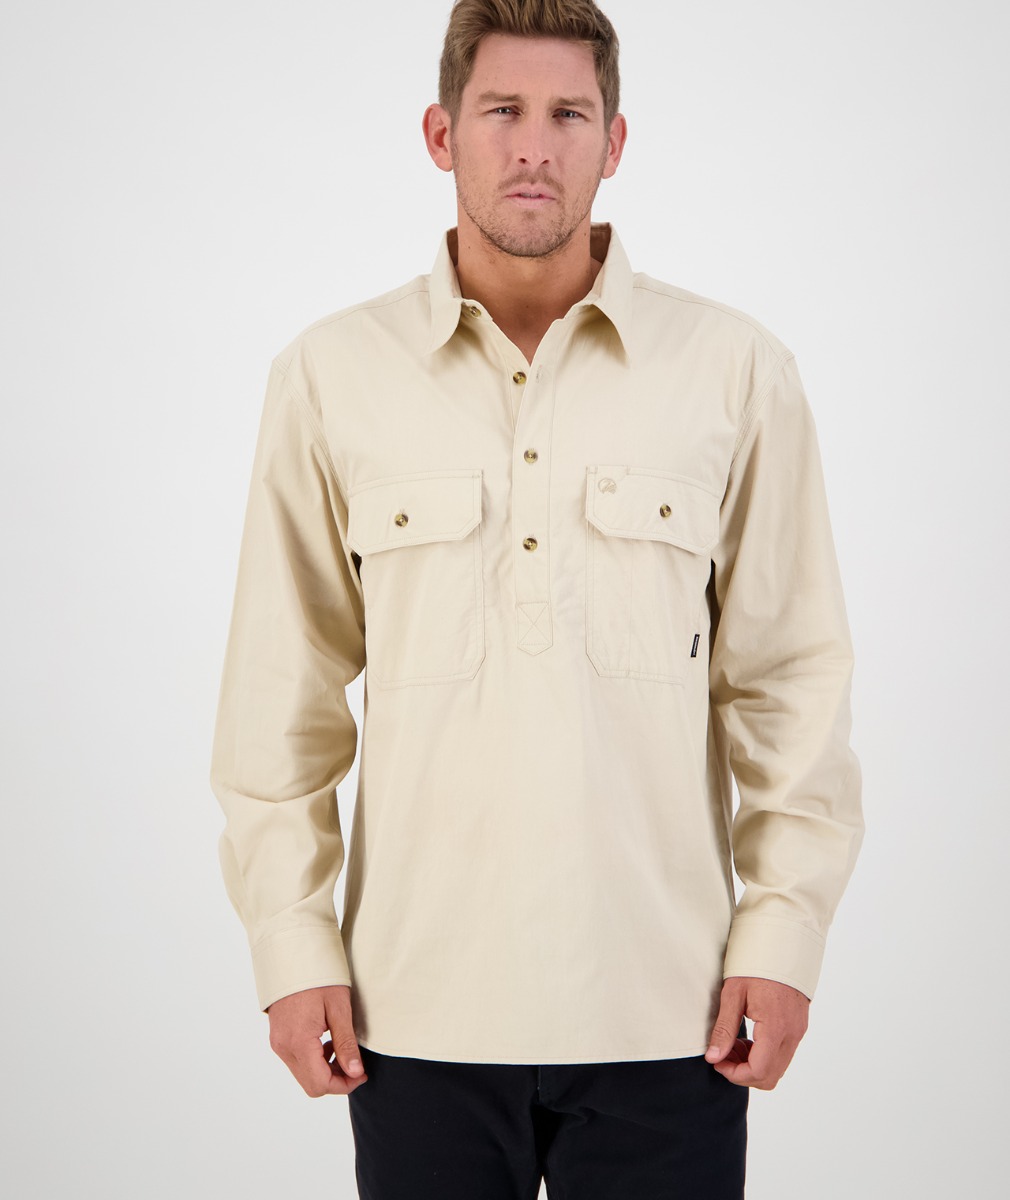 Men's Bendigo Long Sleeve Work Shirt